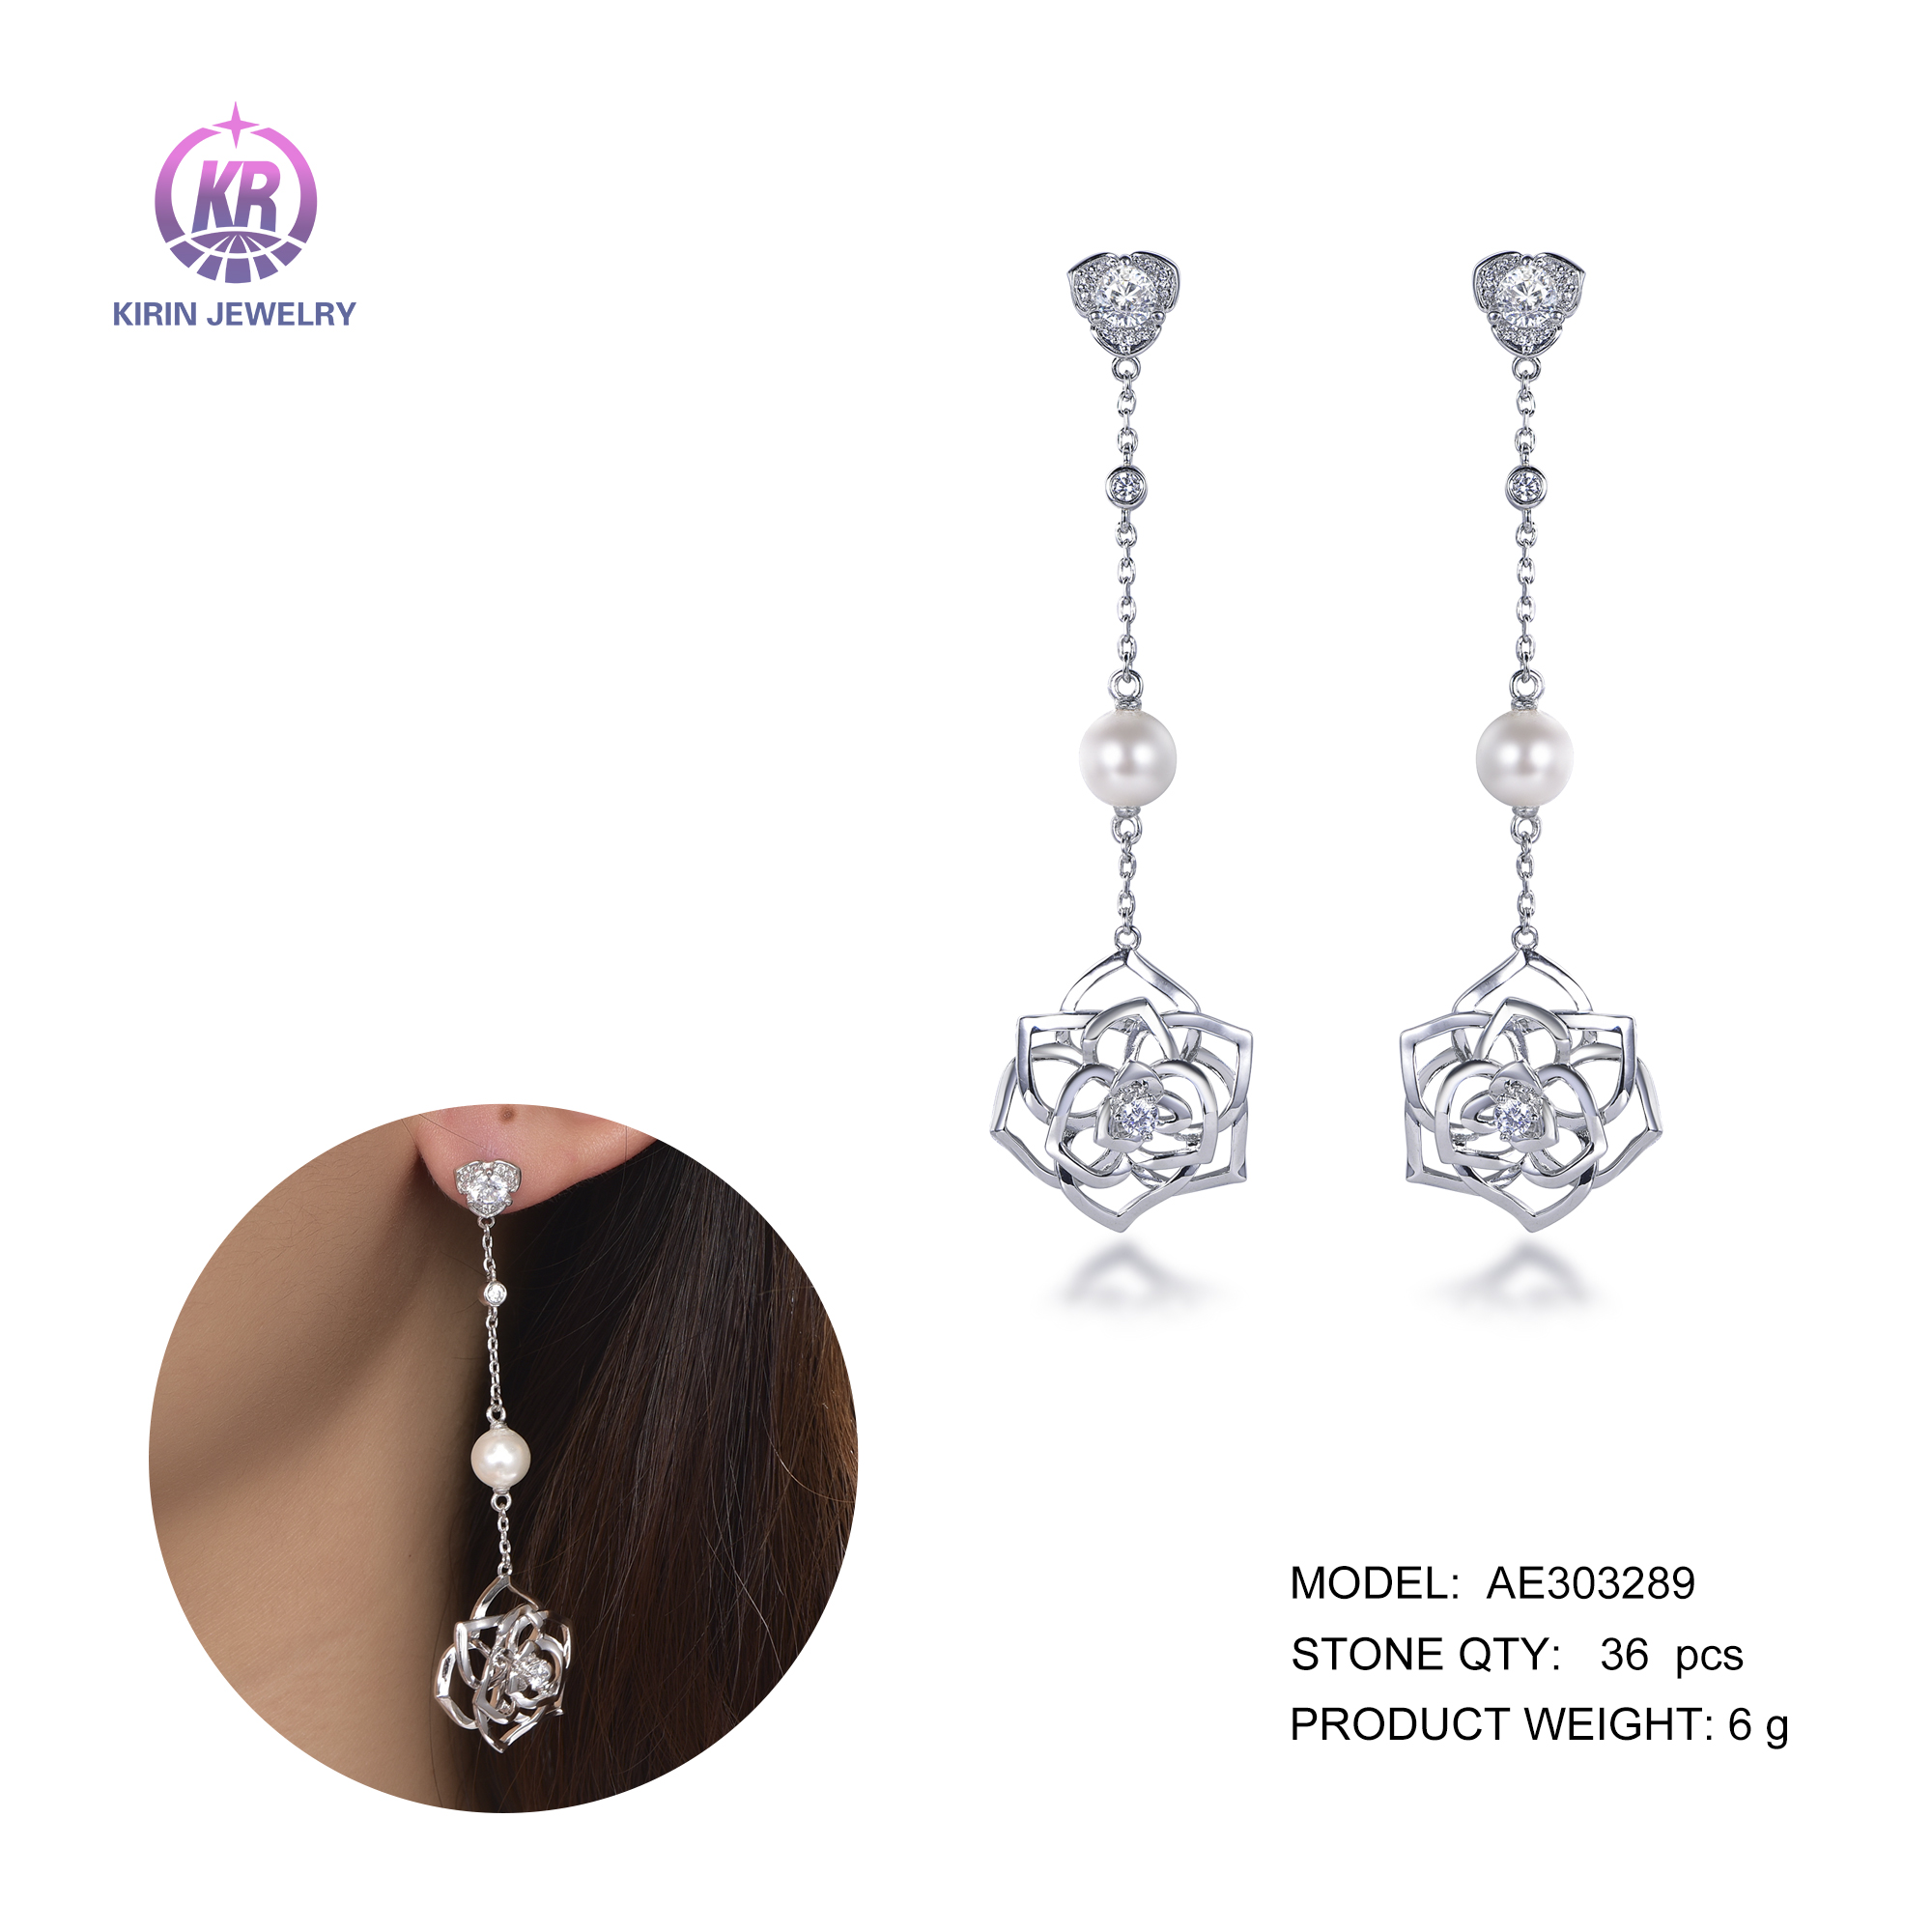 flower drop earrings with rhodium plating 303289 - Kirin Jewelry Company